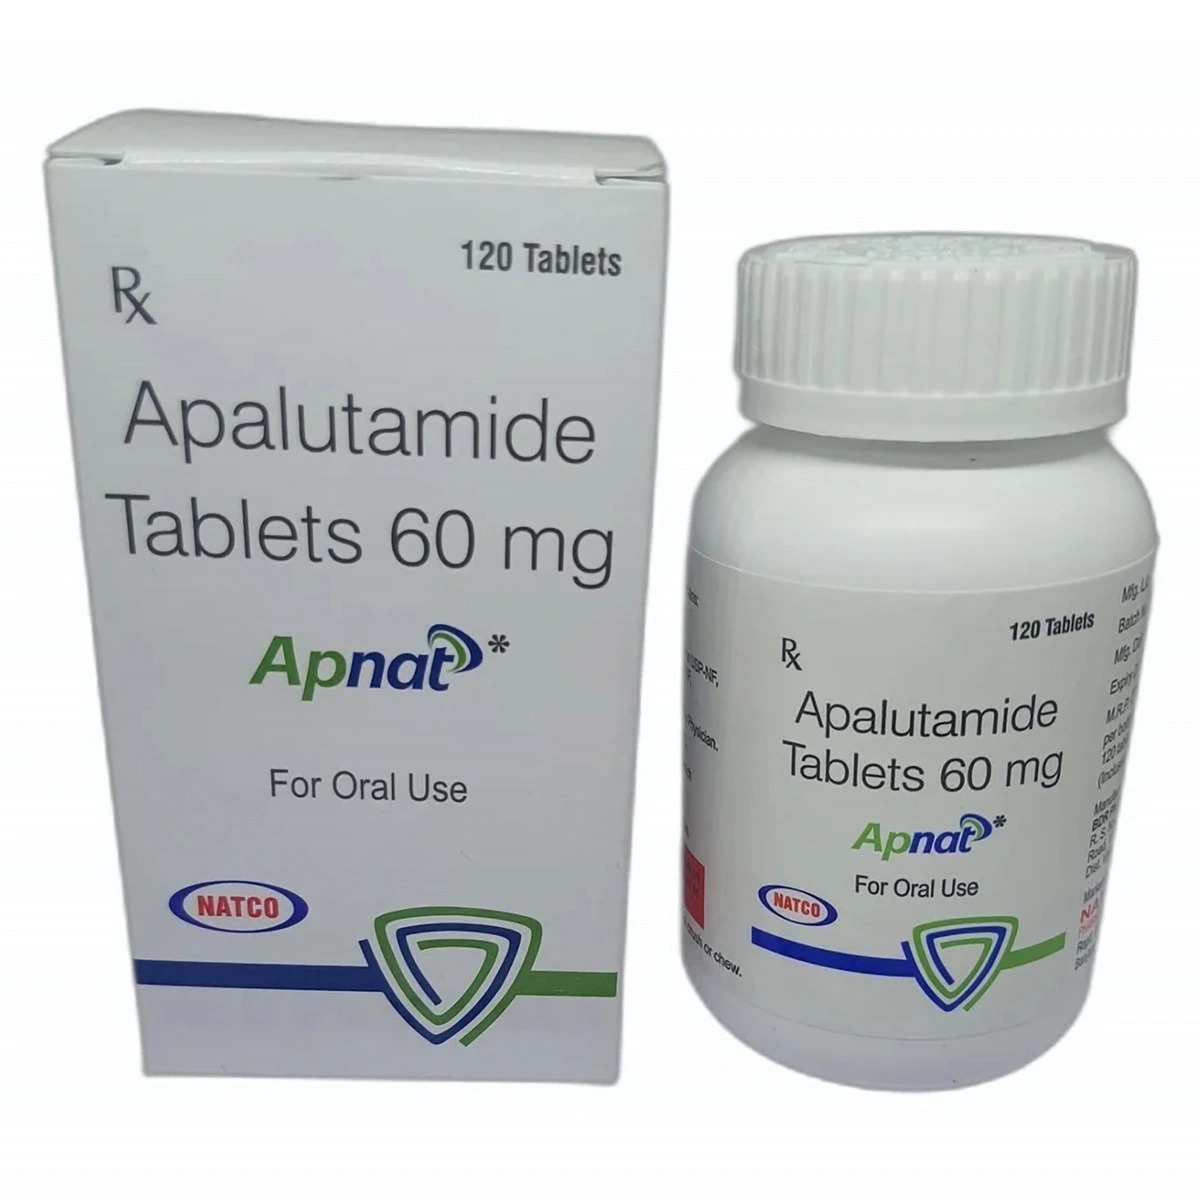 Apalutamide 60mg Tablet (Apnat)